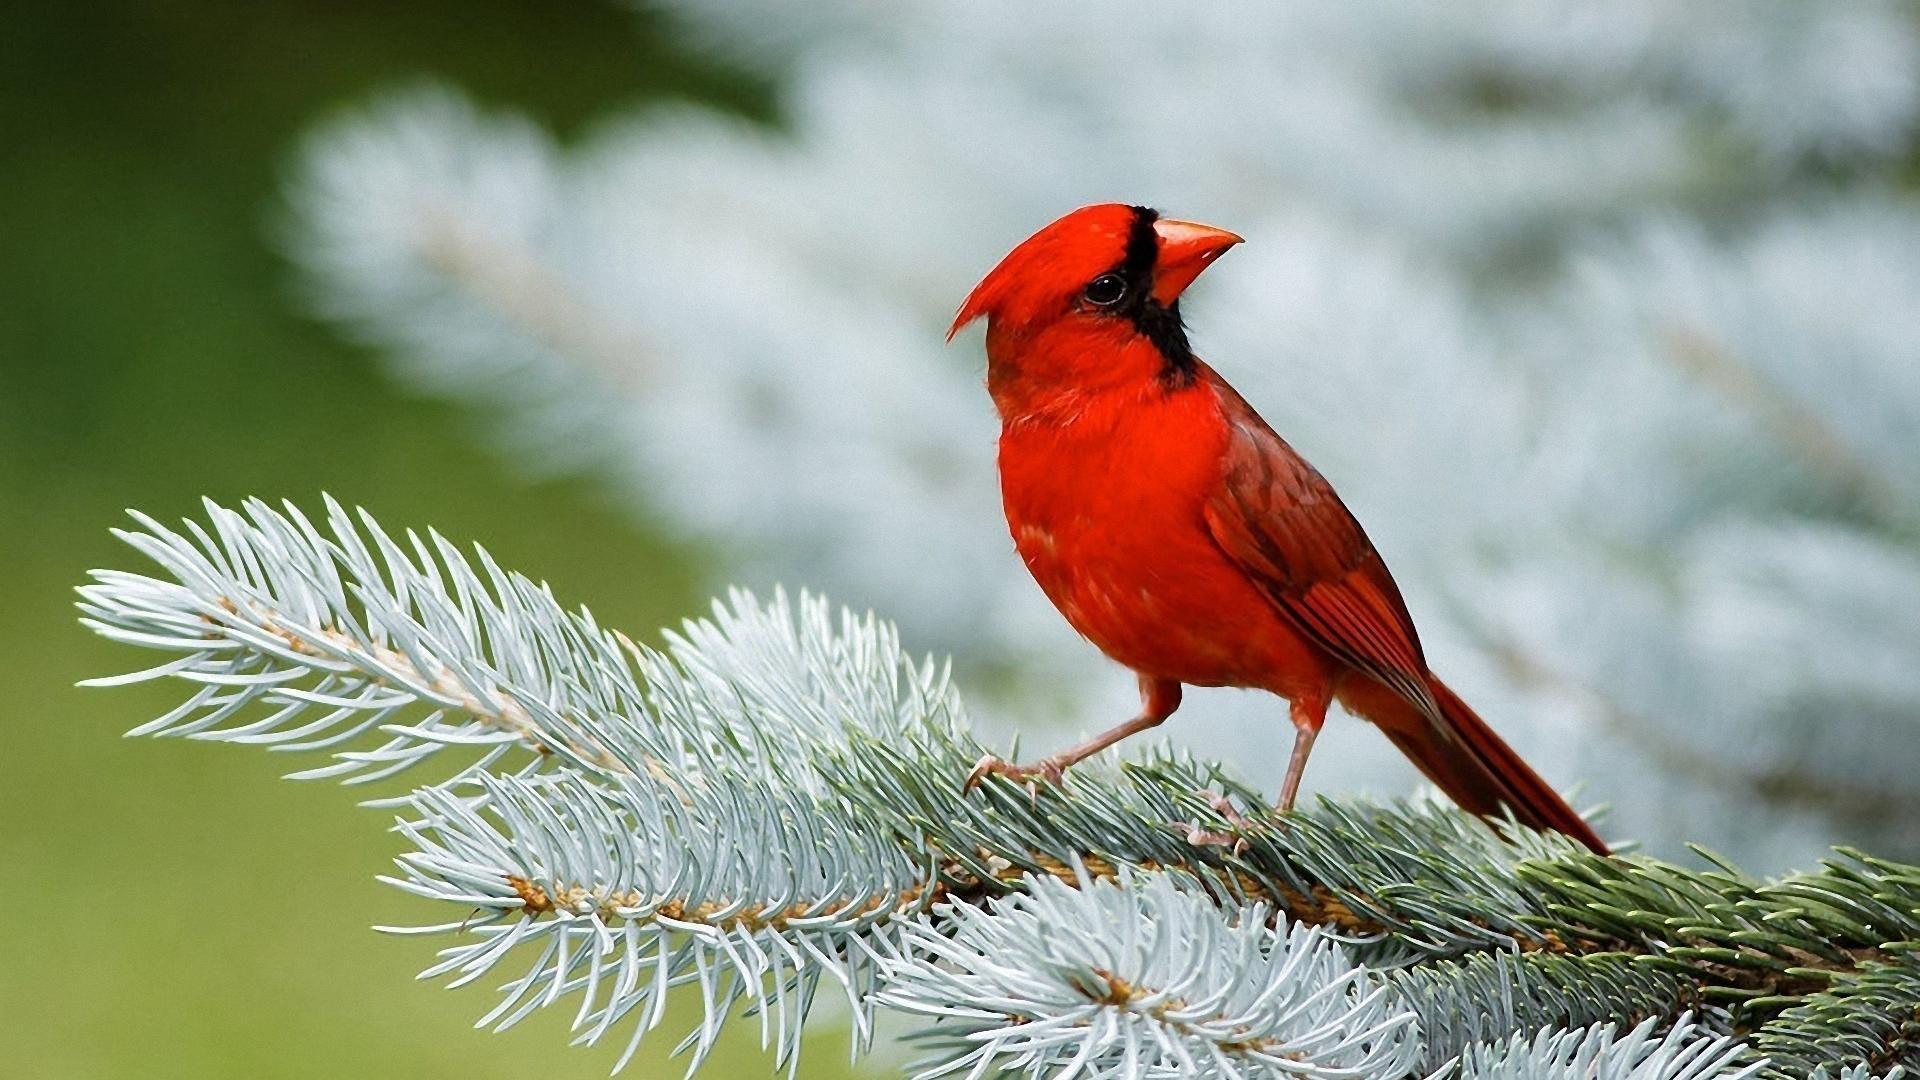 Beautiful Birds Wallpaper. Red Cardinal Bird On White Christmas